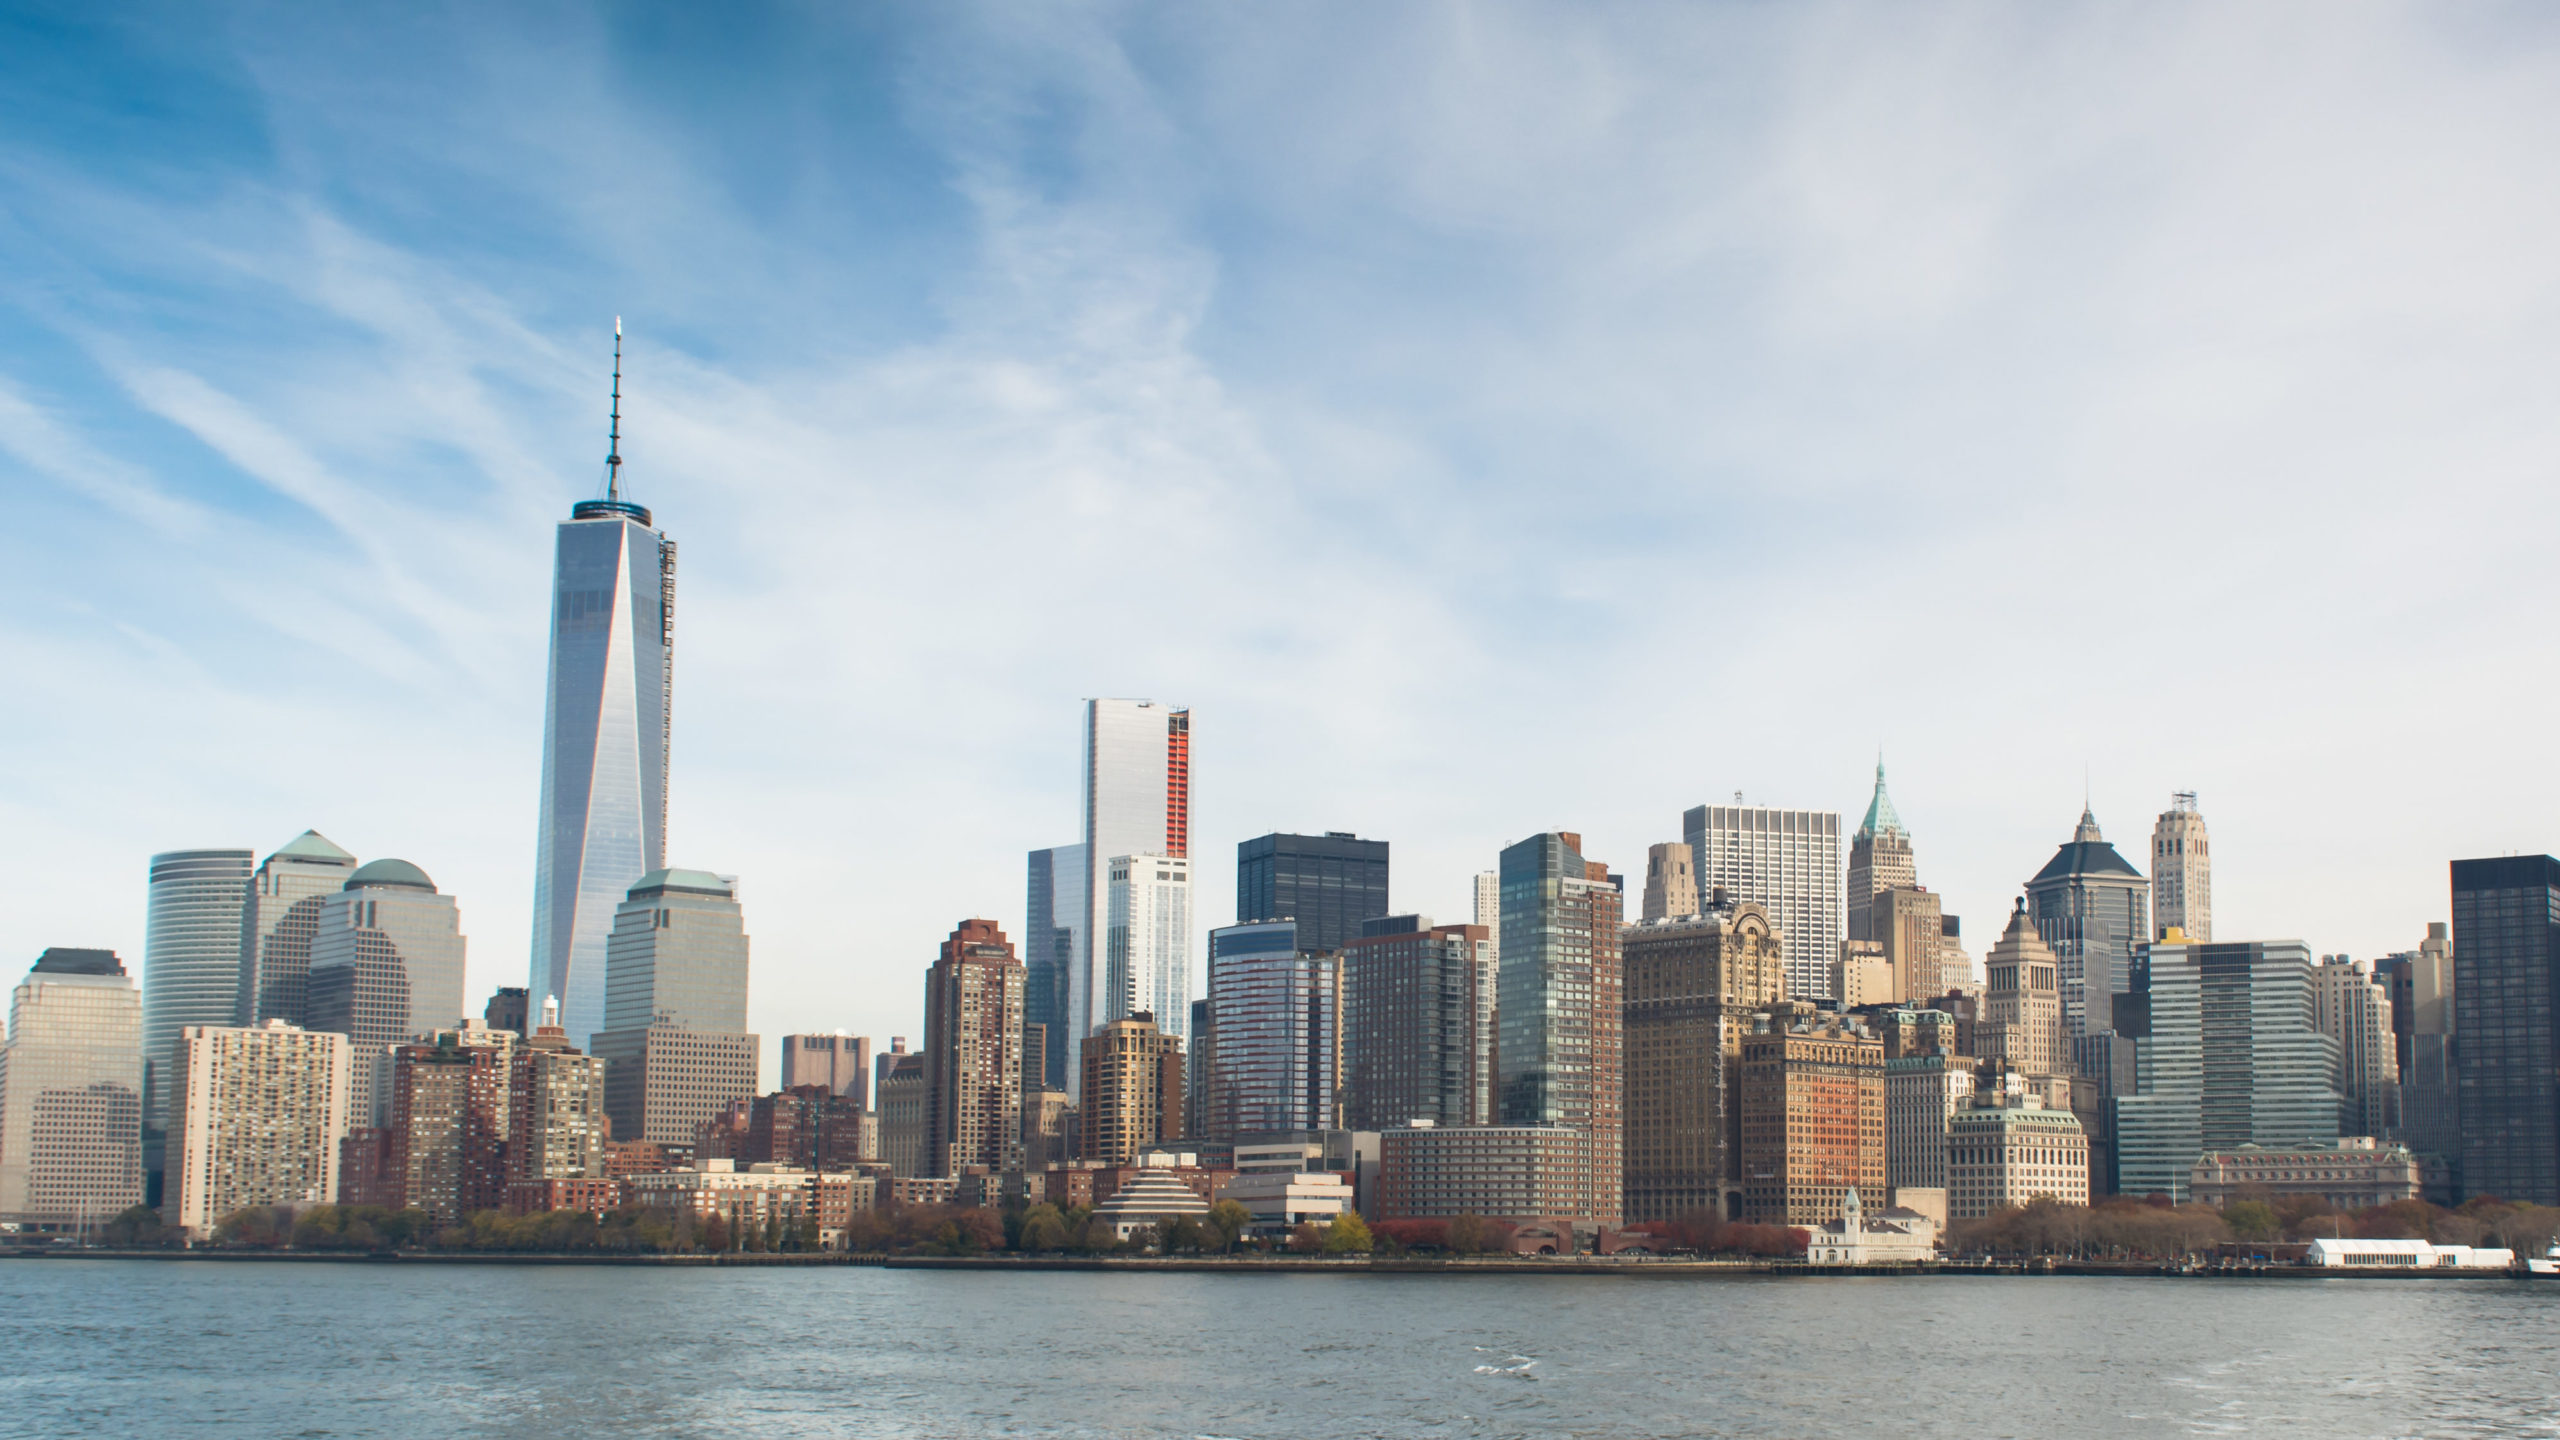 Manhattan, New York by Glenn Wedin (2013)